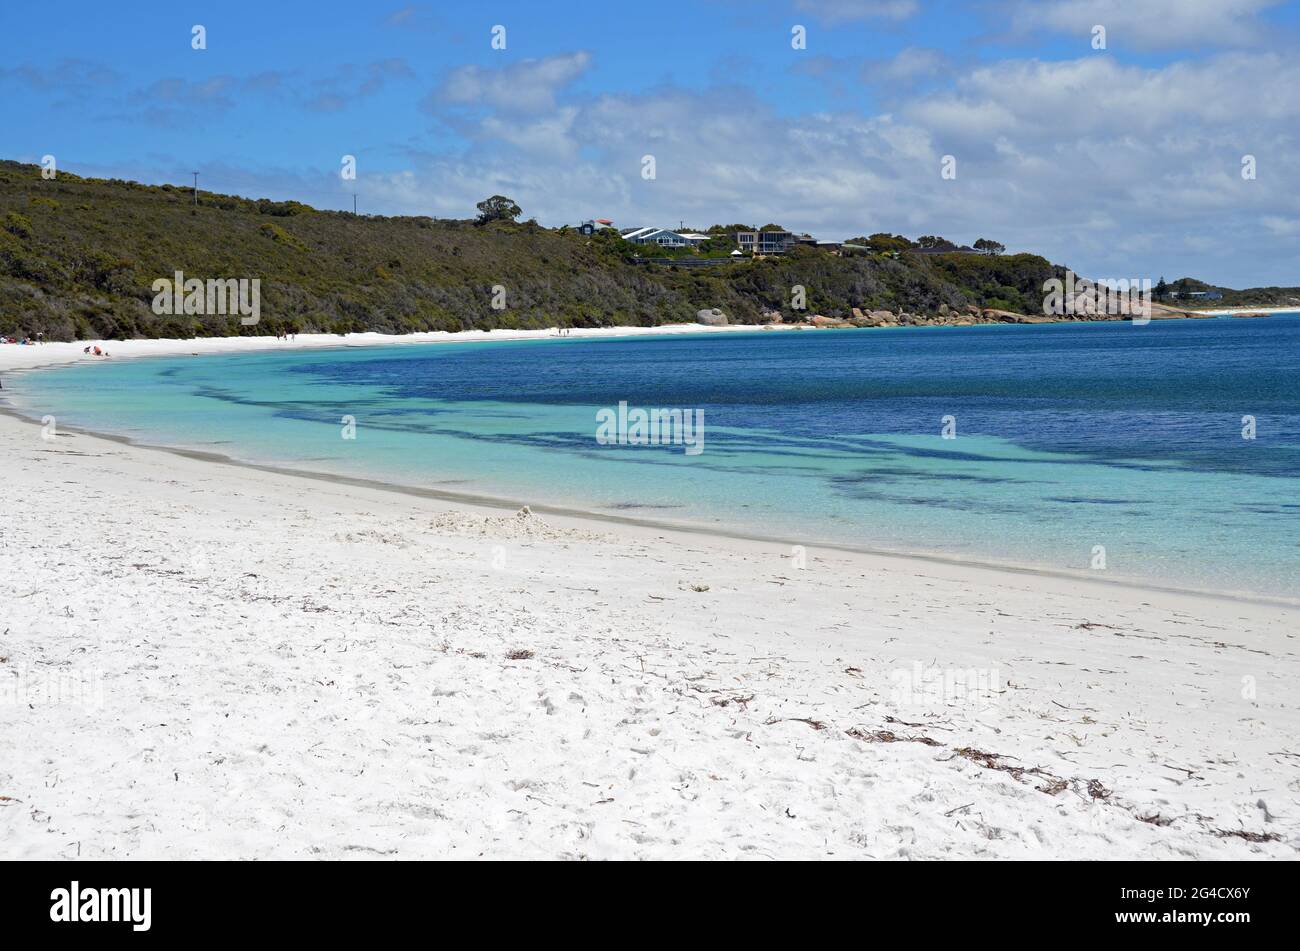 misery beach paysage avec eau turquoise albany australie occidentale Banque D'Images